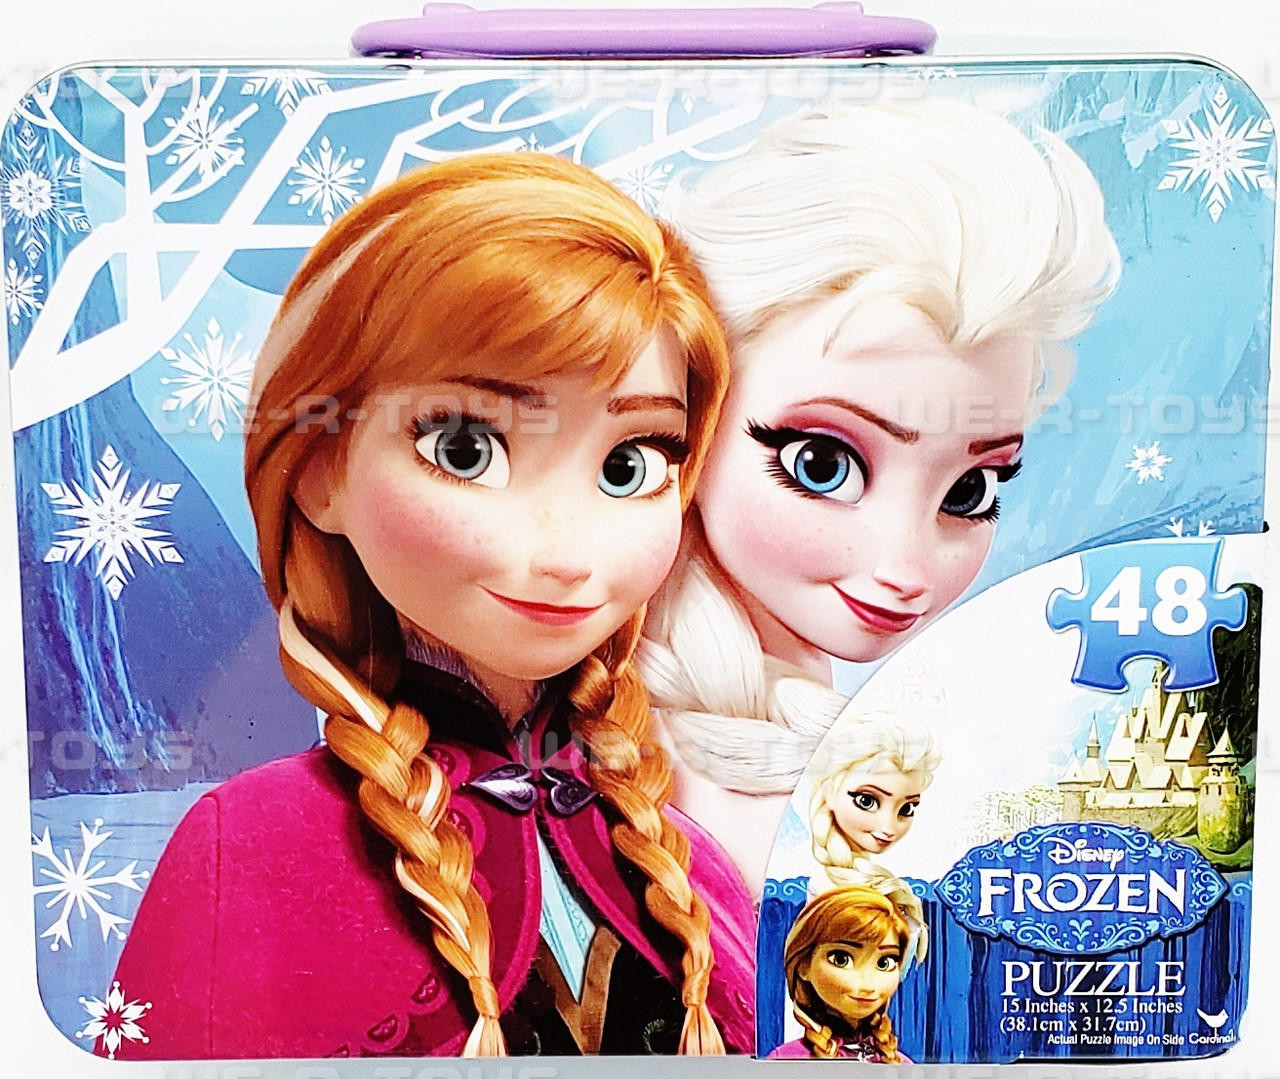 Disney Frozen Girls' Elsa And Anna Lunchbox